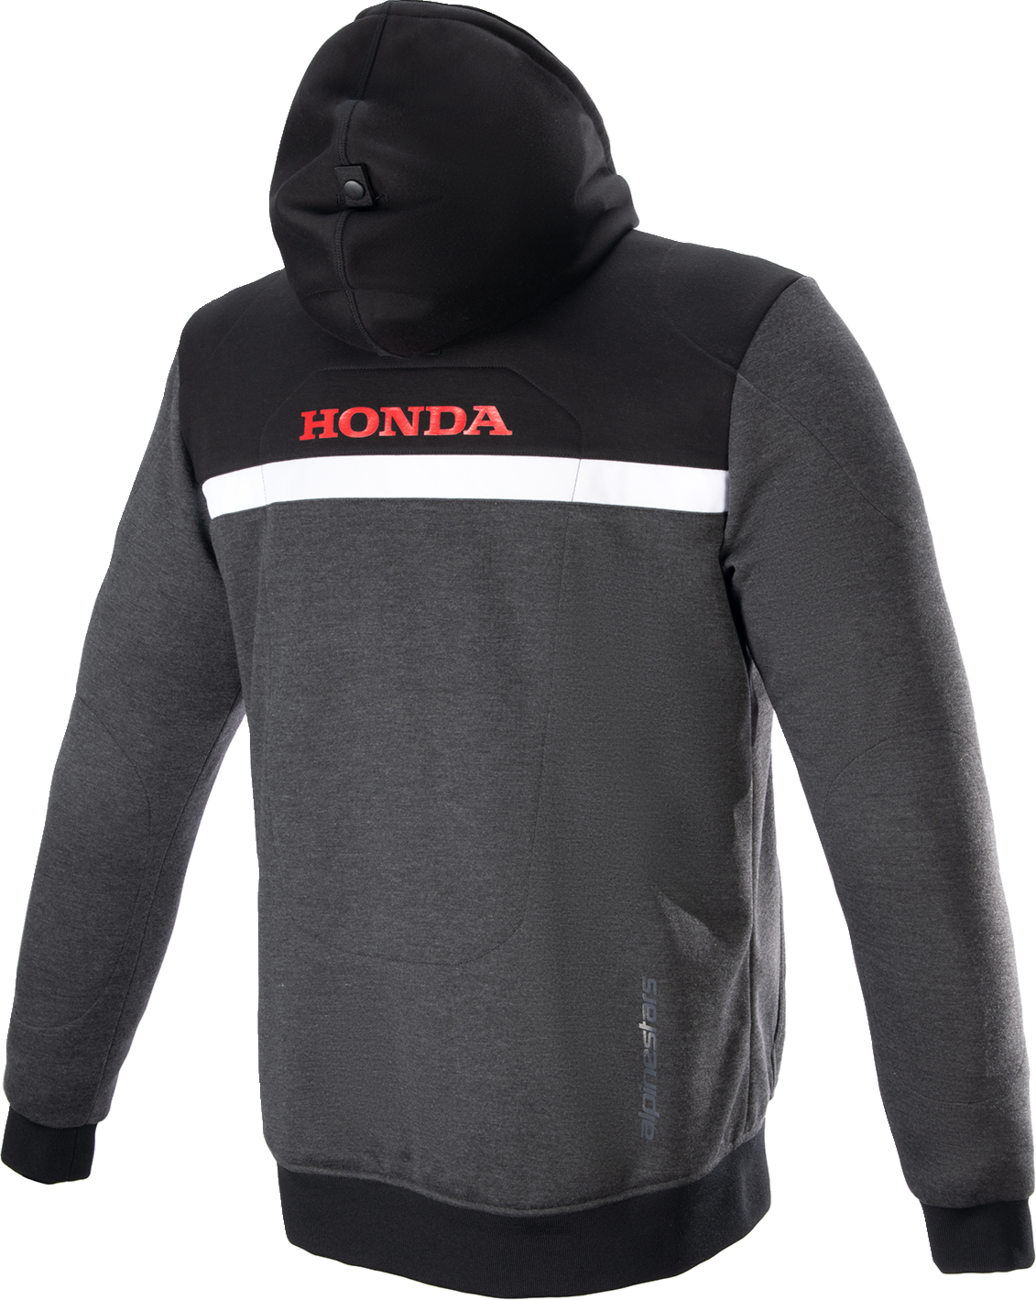 ALPINESTARS Honda Chrome Street Hoodie - Black/Gray/Red - Medium 4201323-1908-M